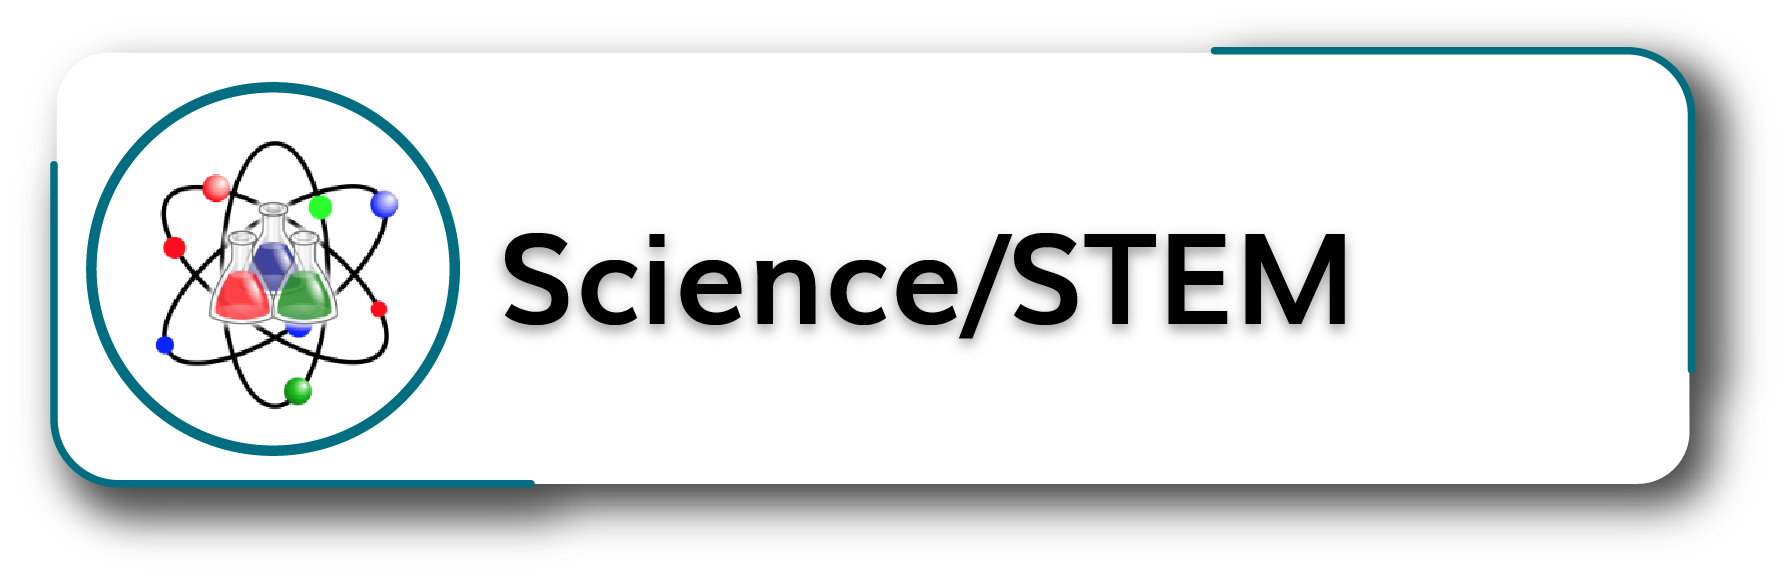 Science/STEM Button